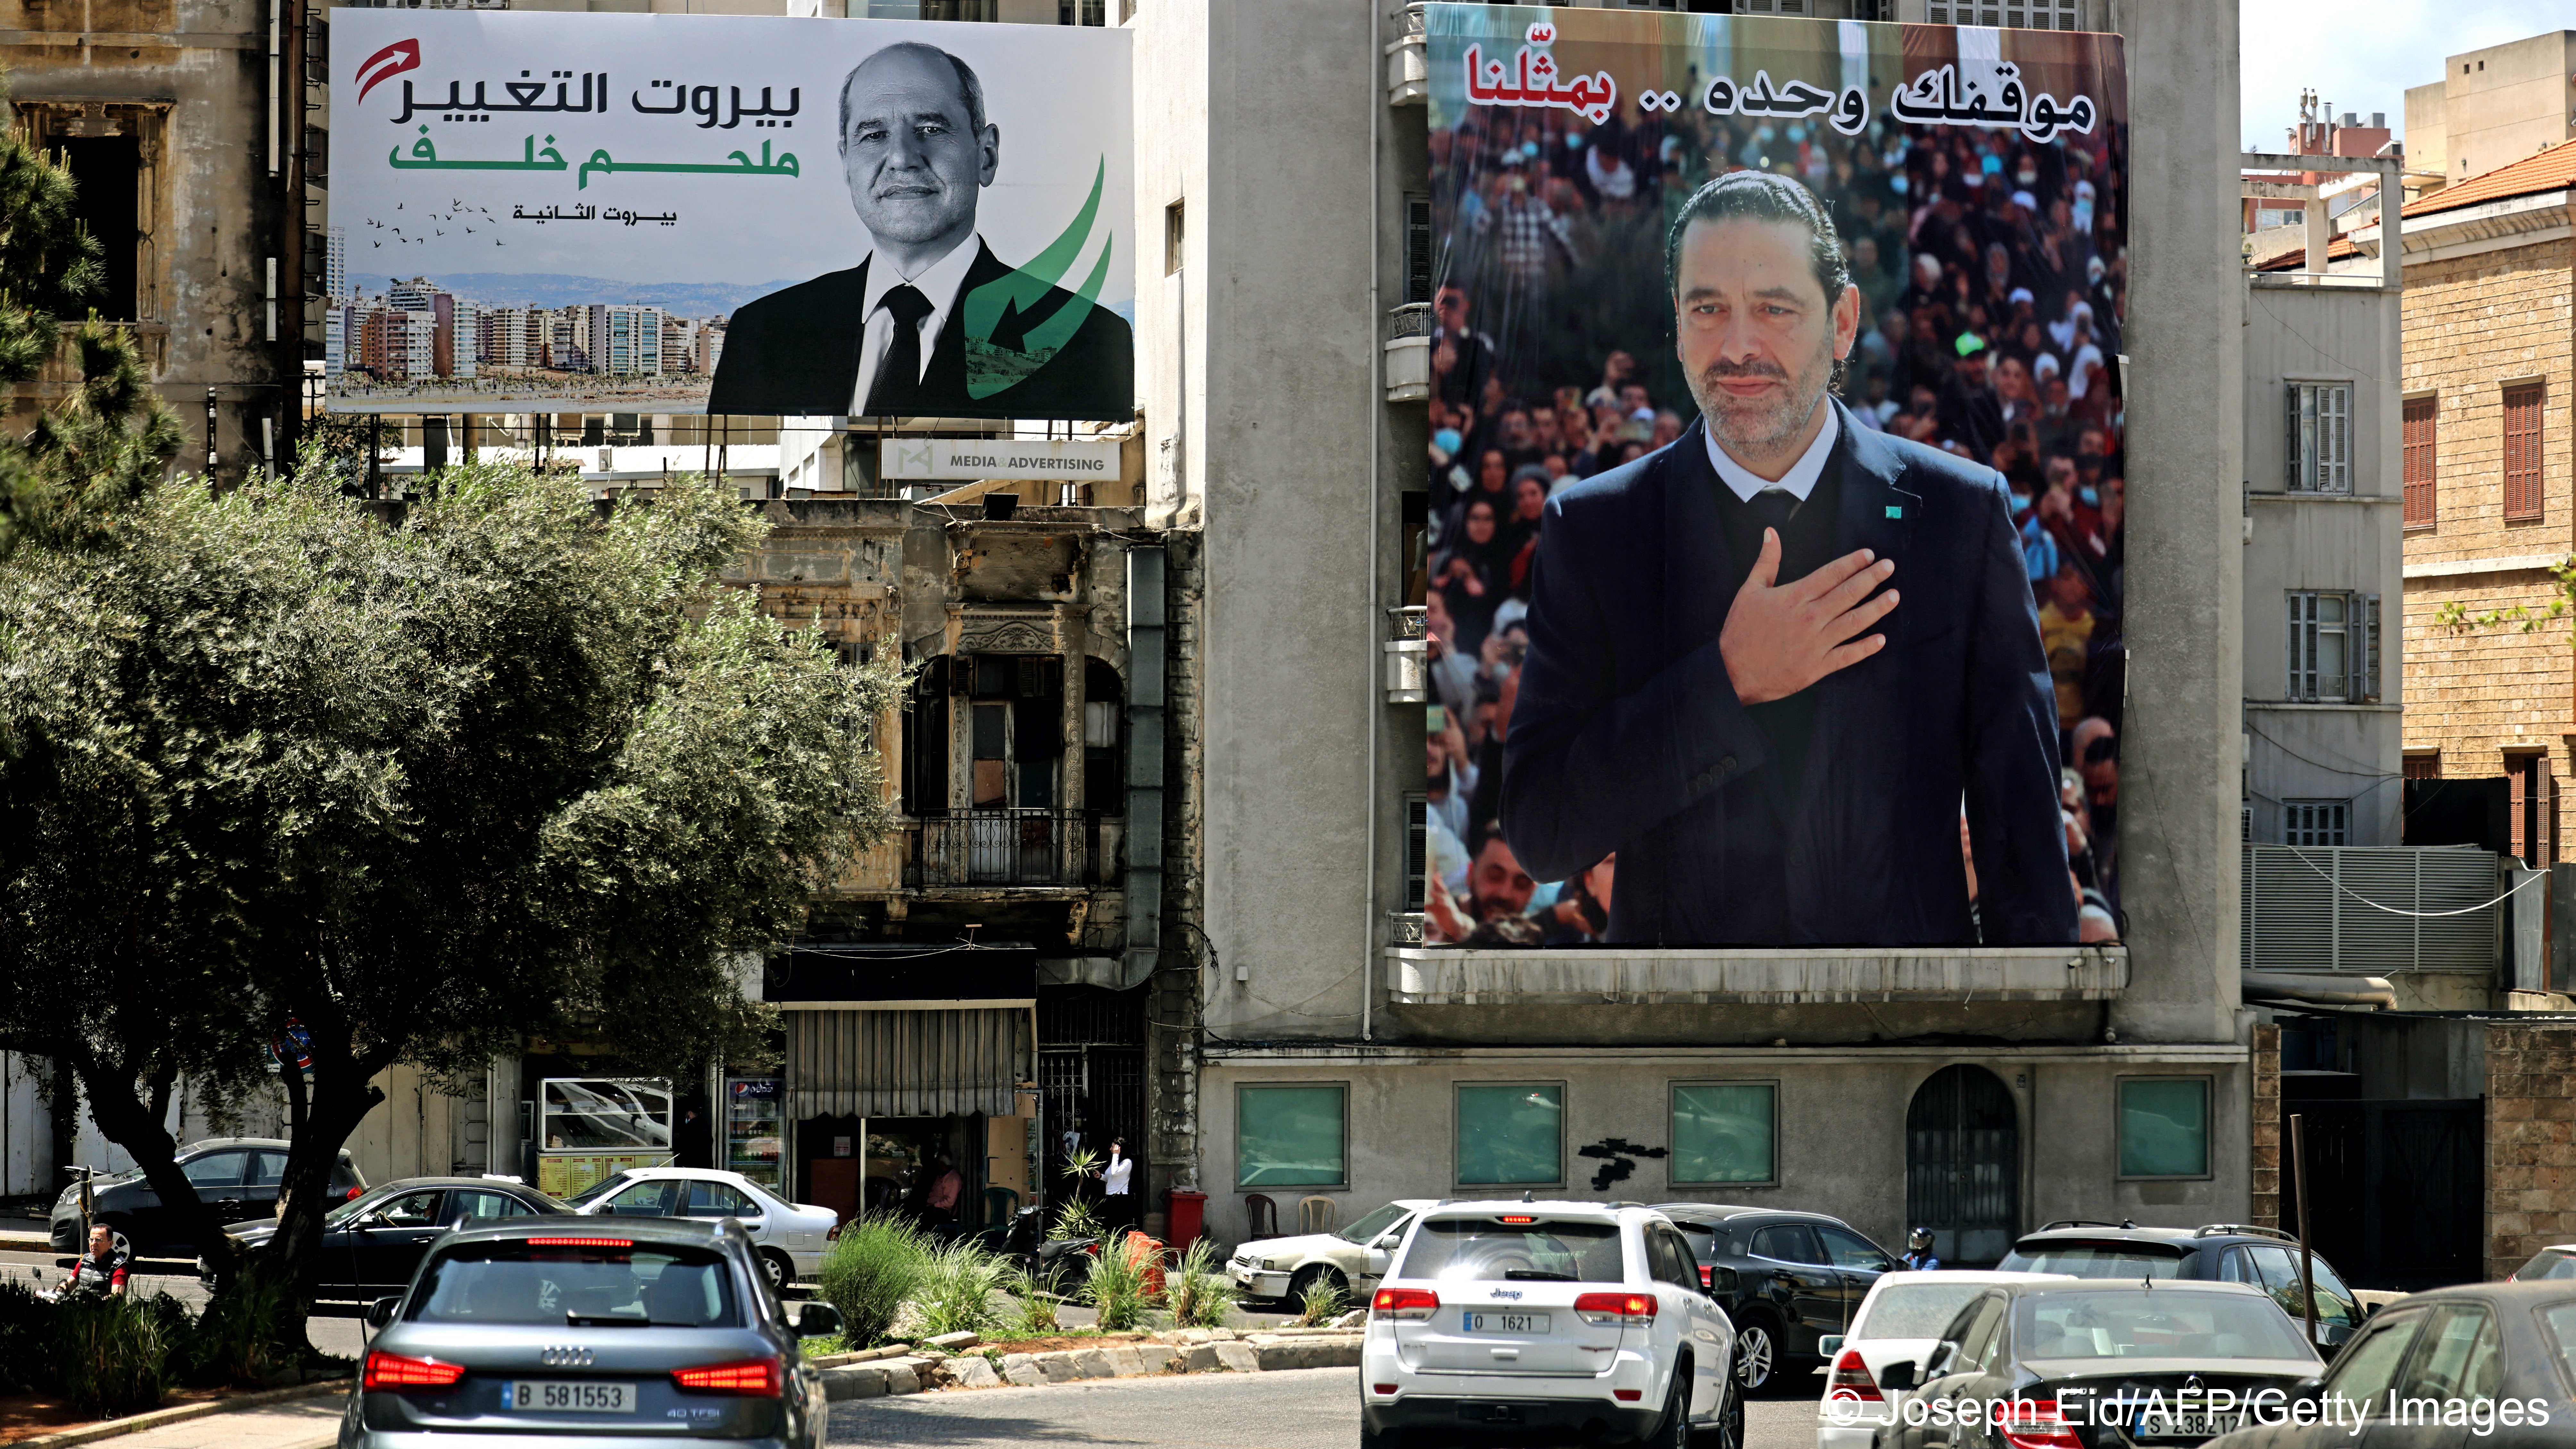 Election posters in Lebanon (photo: JOSEPH EID/AFP) 